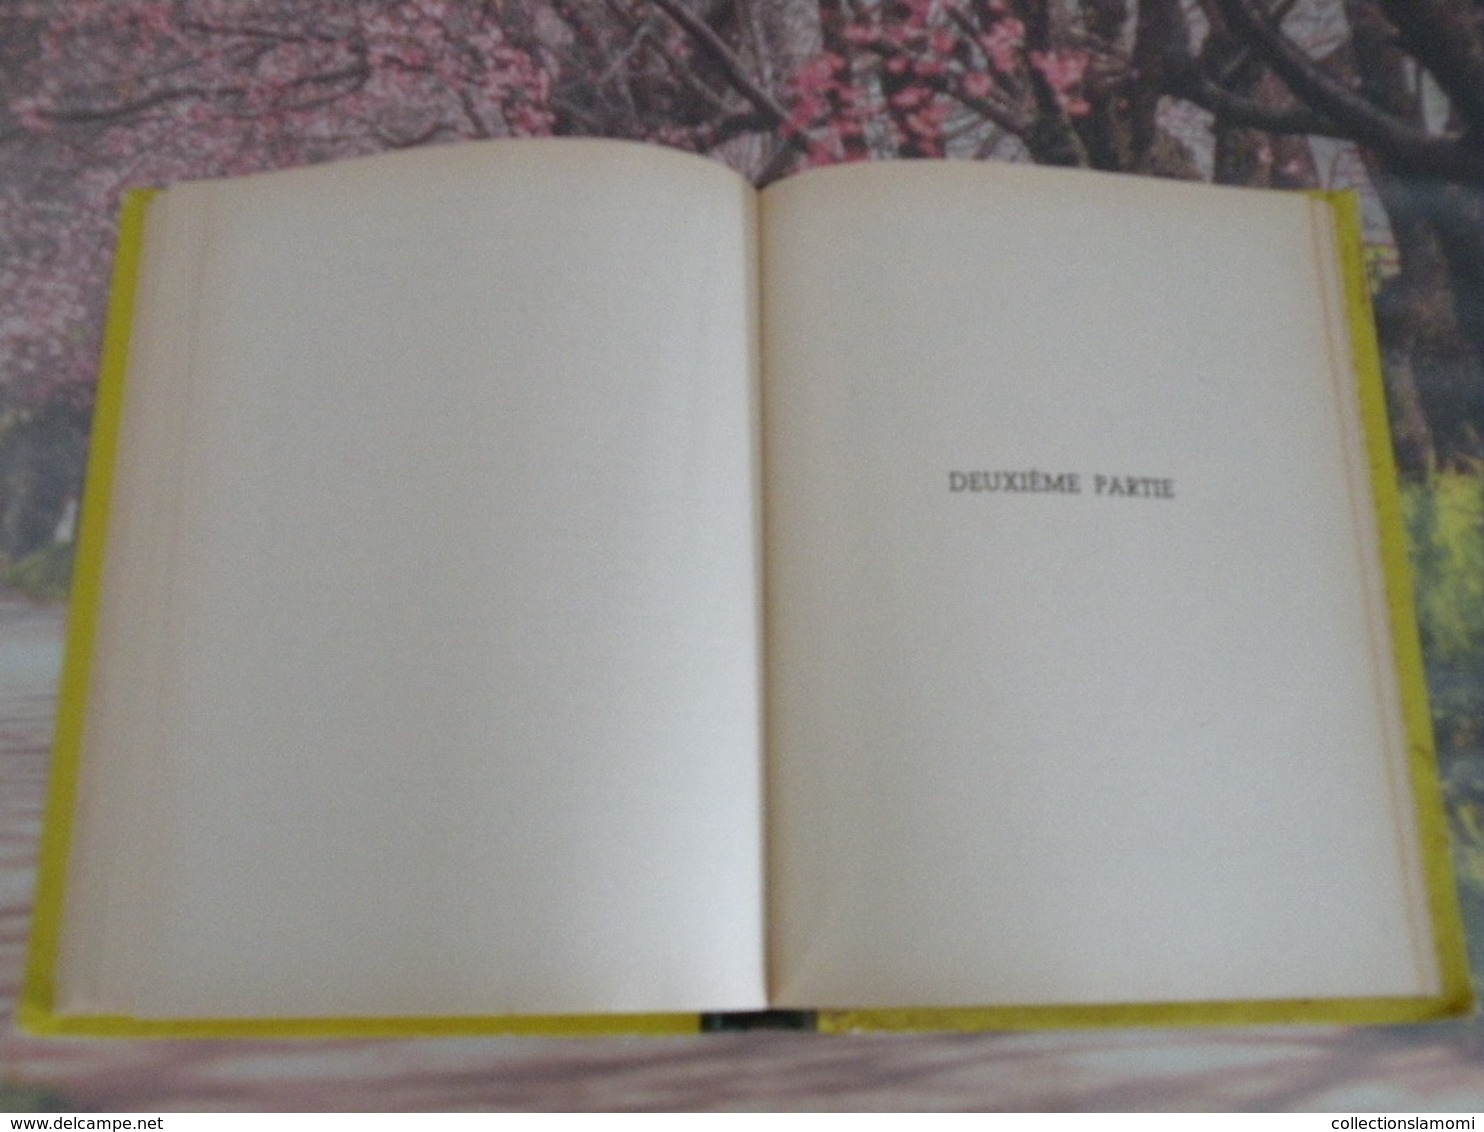 Flammarion > HEIDI GRANDIT > JOHANNA SPYRI - 1950 - 152 pages